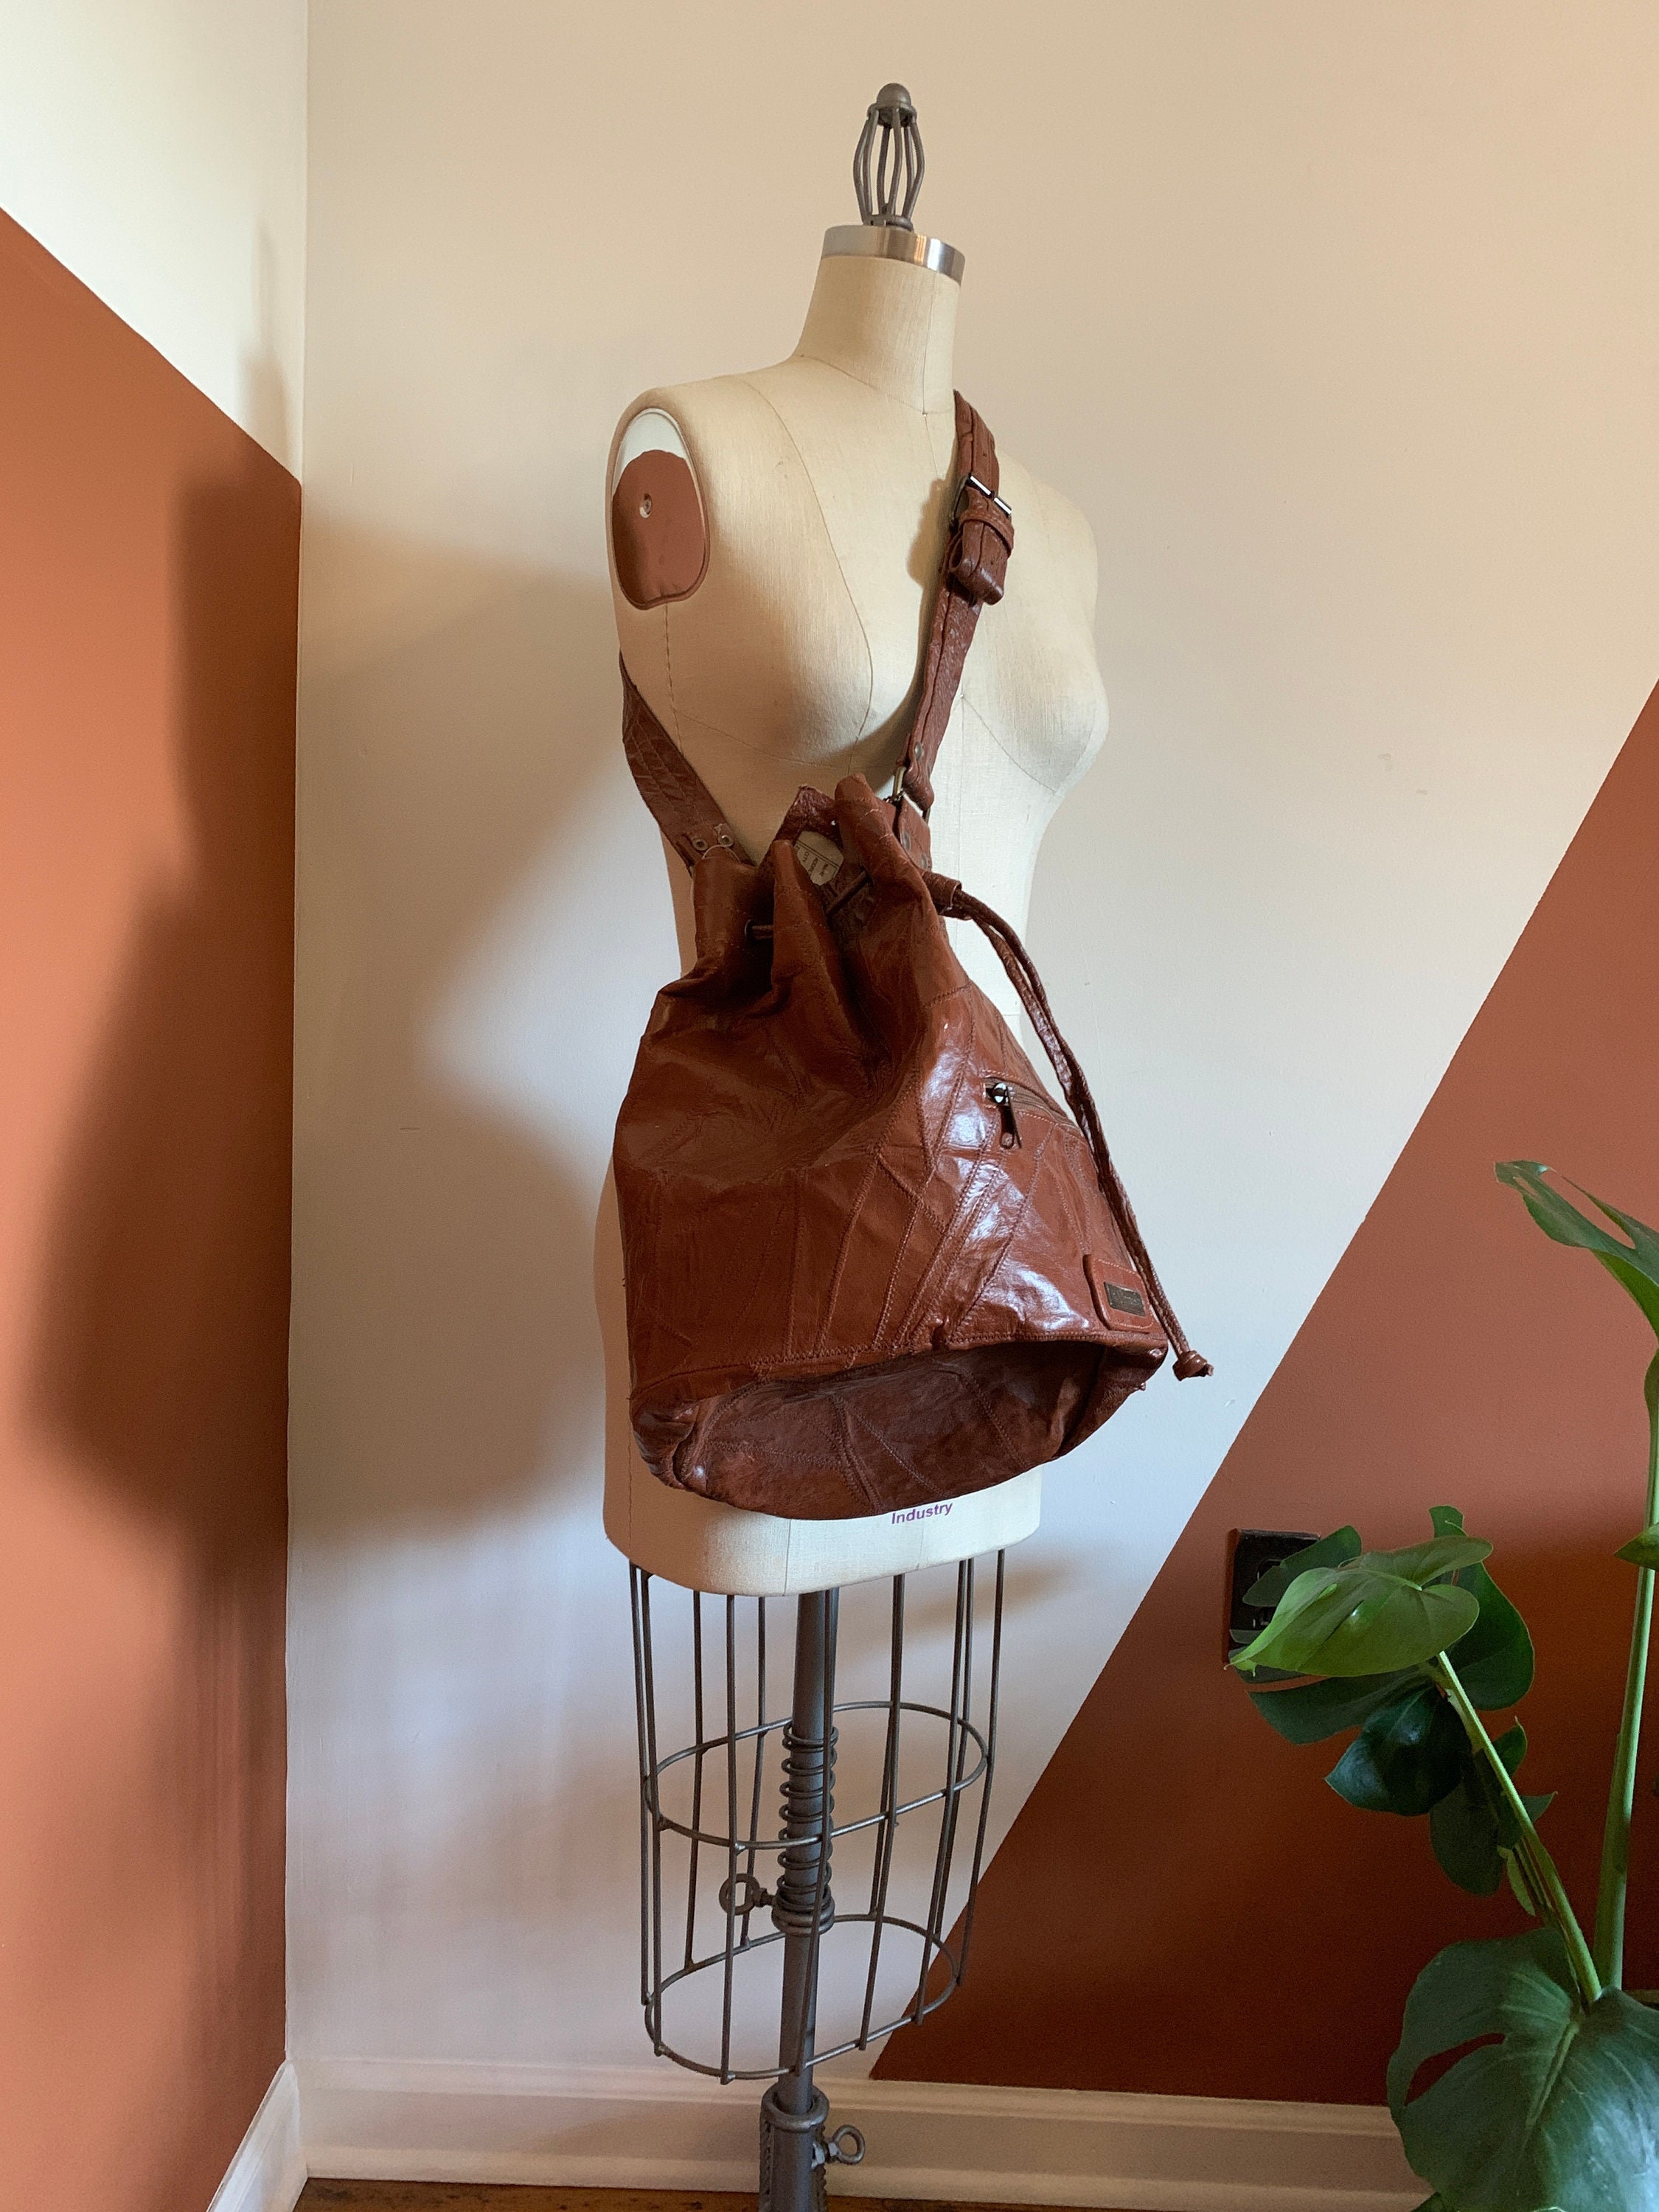 1970s Christian Dior Navy Logo Duffle Bag – Shrimpton Couture